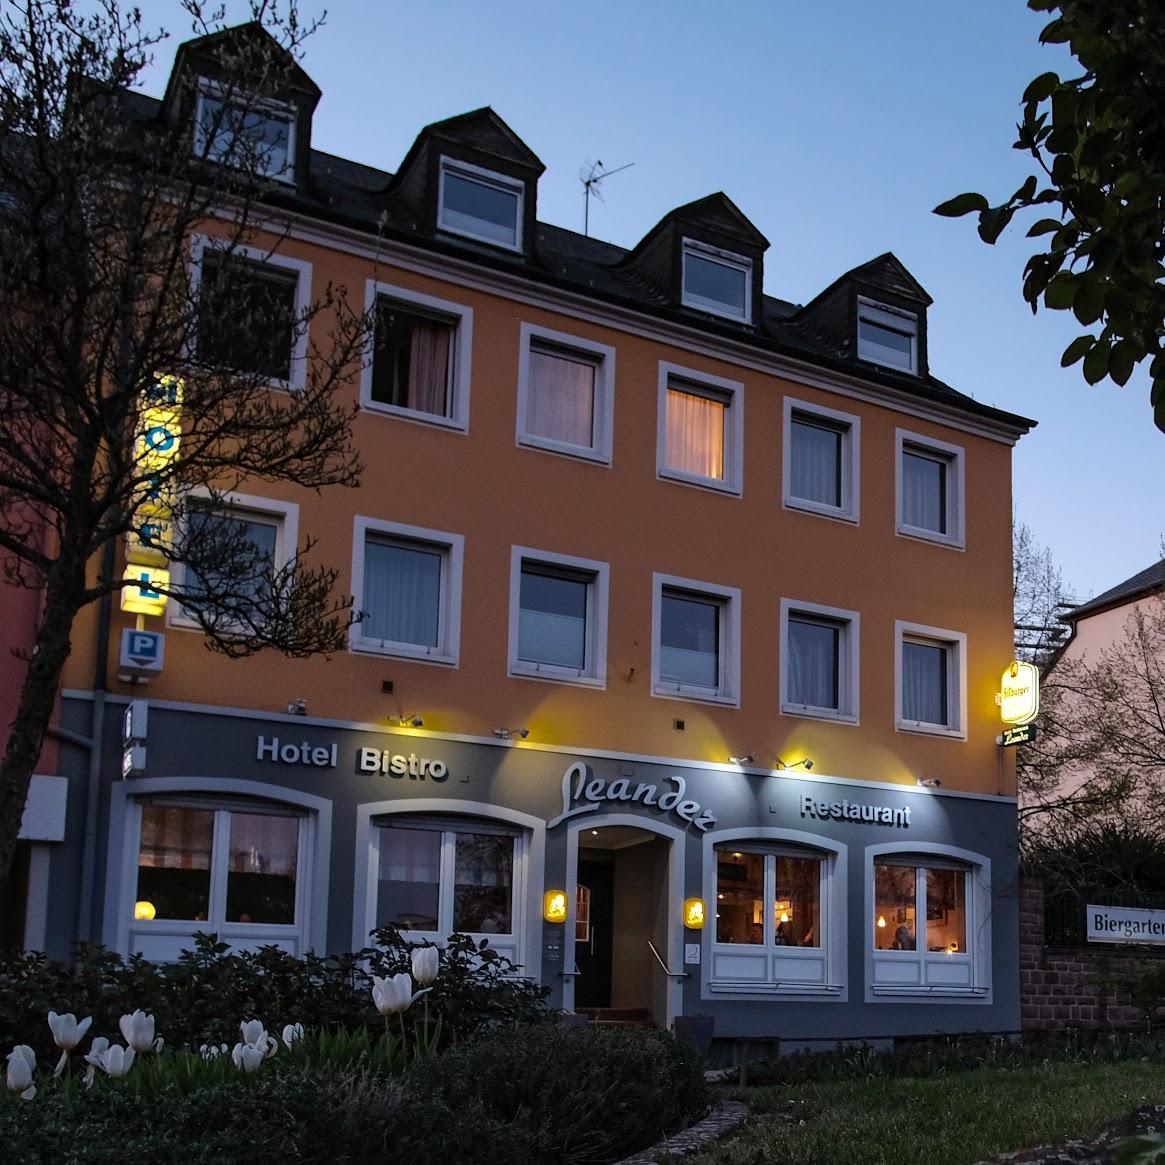 Restaurant "Hotel-Restaurant Leander" in Bitburg